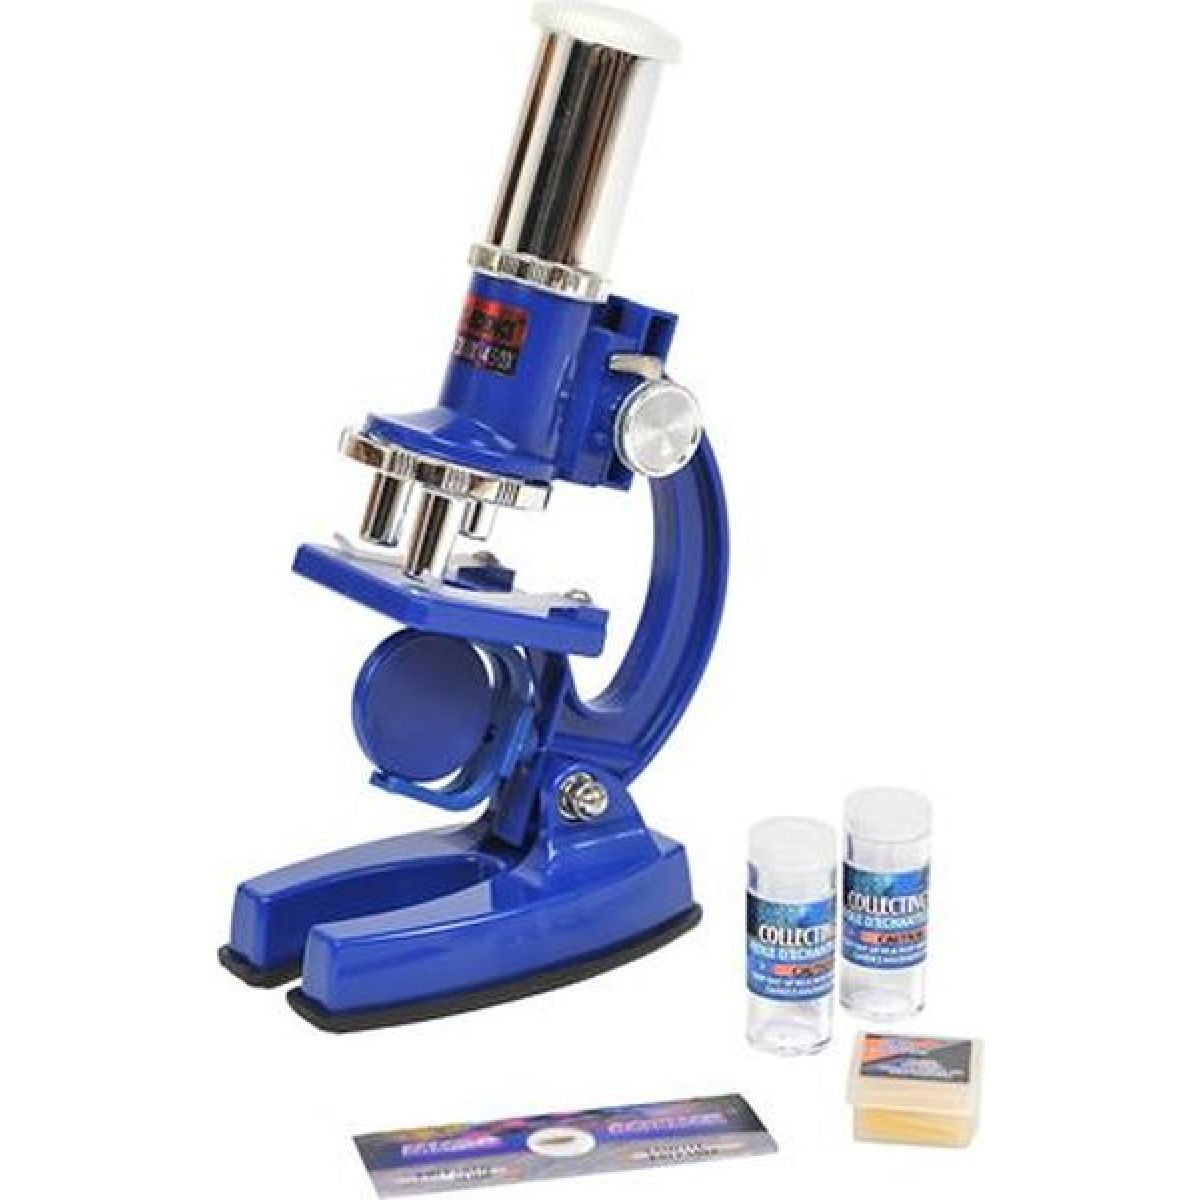 Mac Toys Mikroskop 100/200/450x